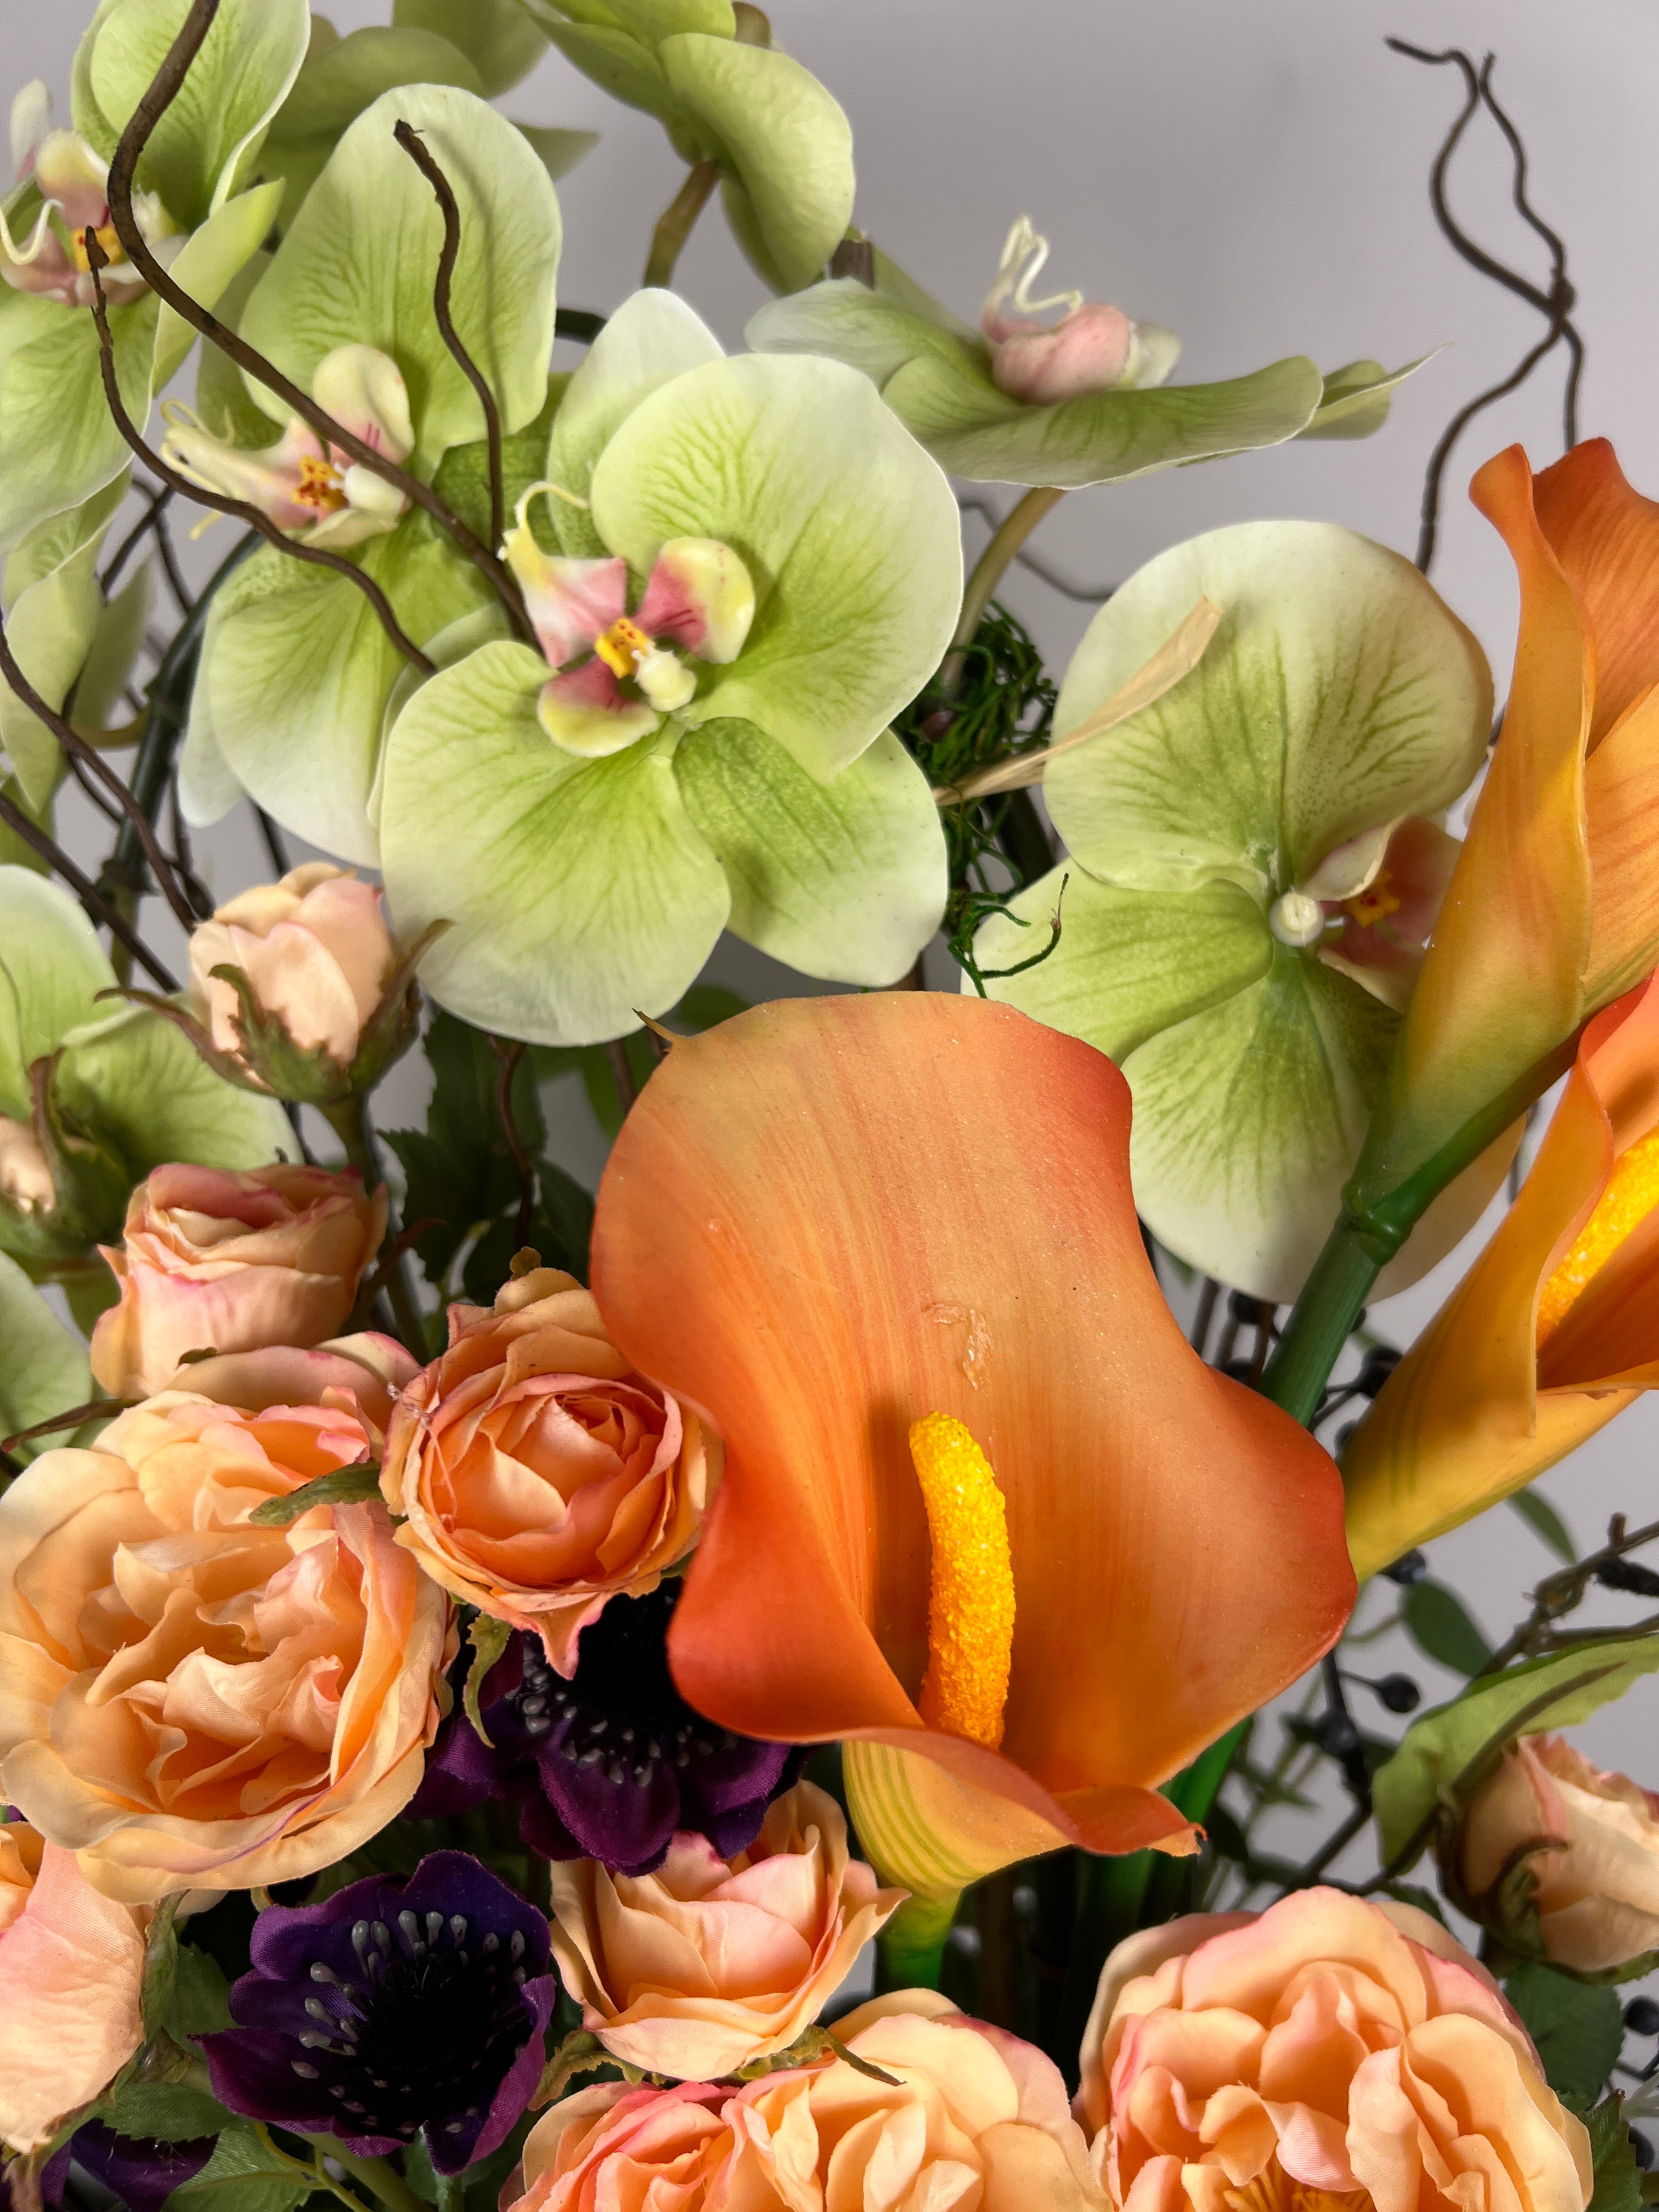 Artificial flower arrangement/ Silk calla lily, roses, orchids arrangement/faux flower arrangement/ Elegant luxurious flowers/ Large floral